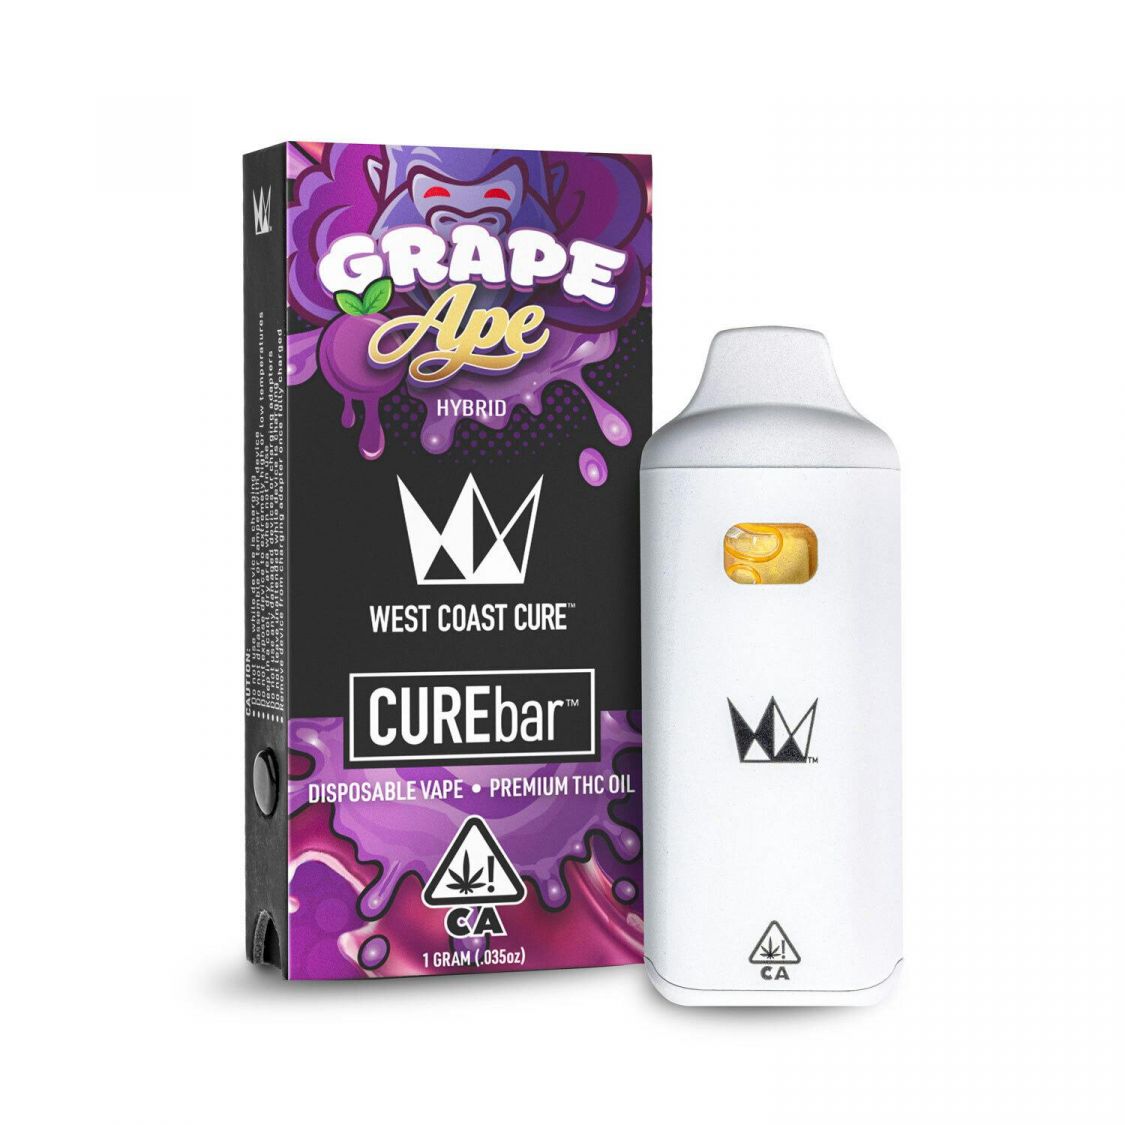 West Coast Cure Grape Ape CUREbar Disposable Vaporizers Disposable